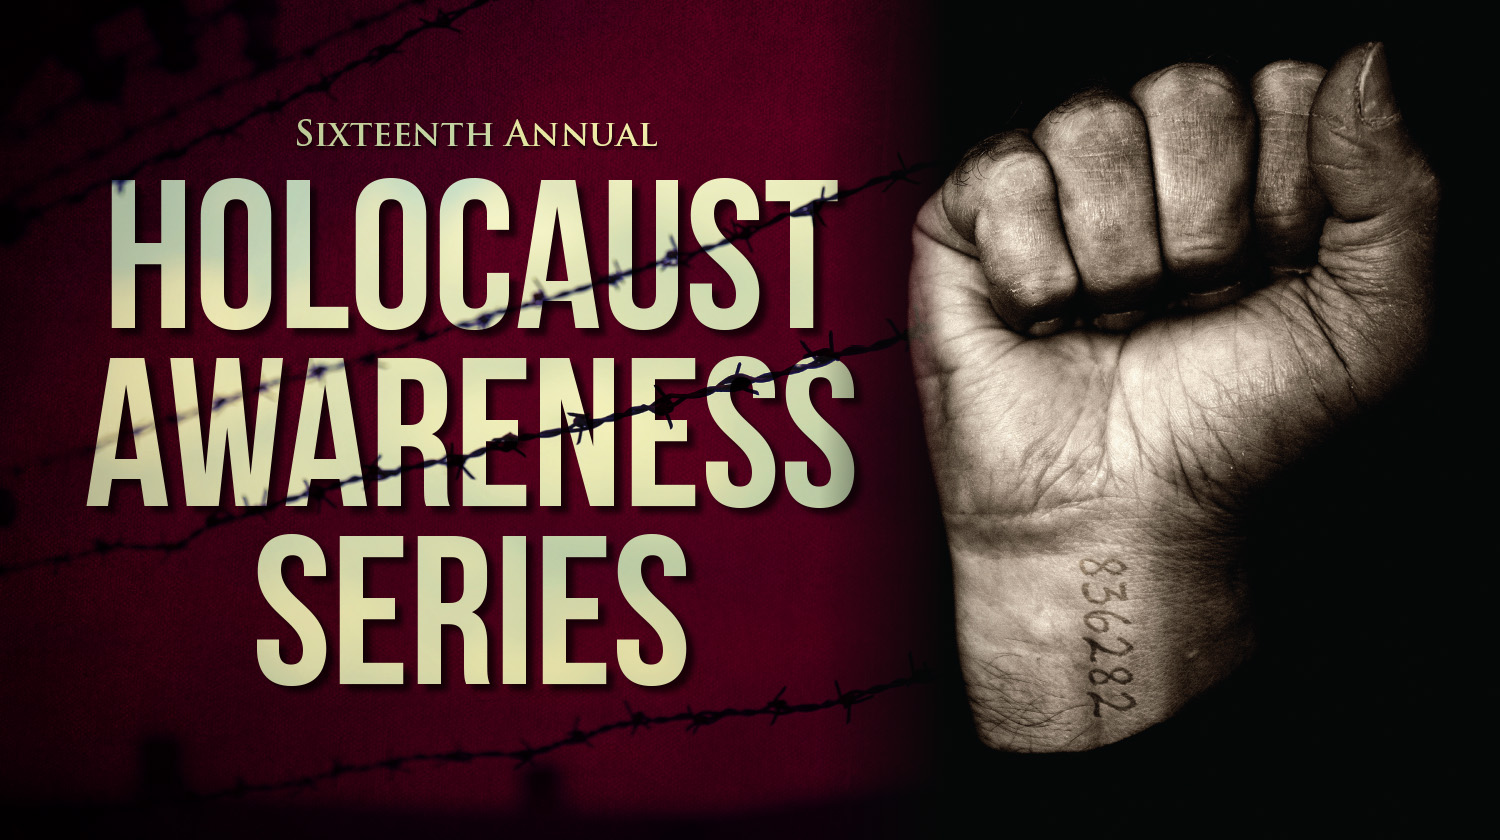 CMU honors Holocaust survivor during sixteenth annual awareness series